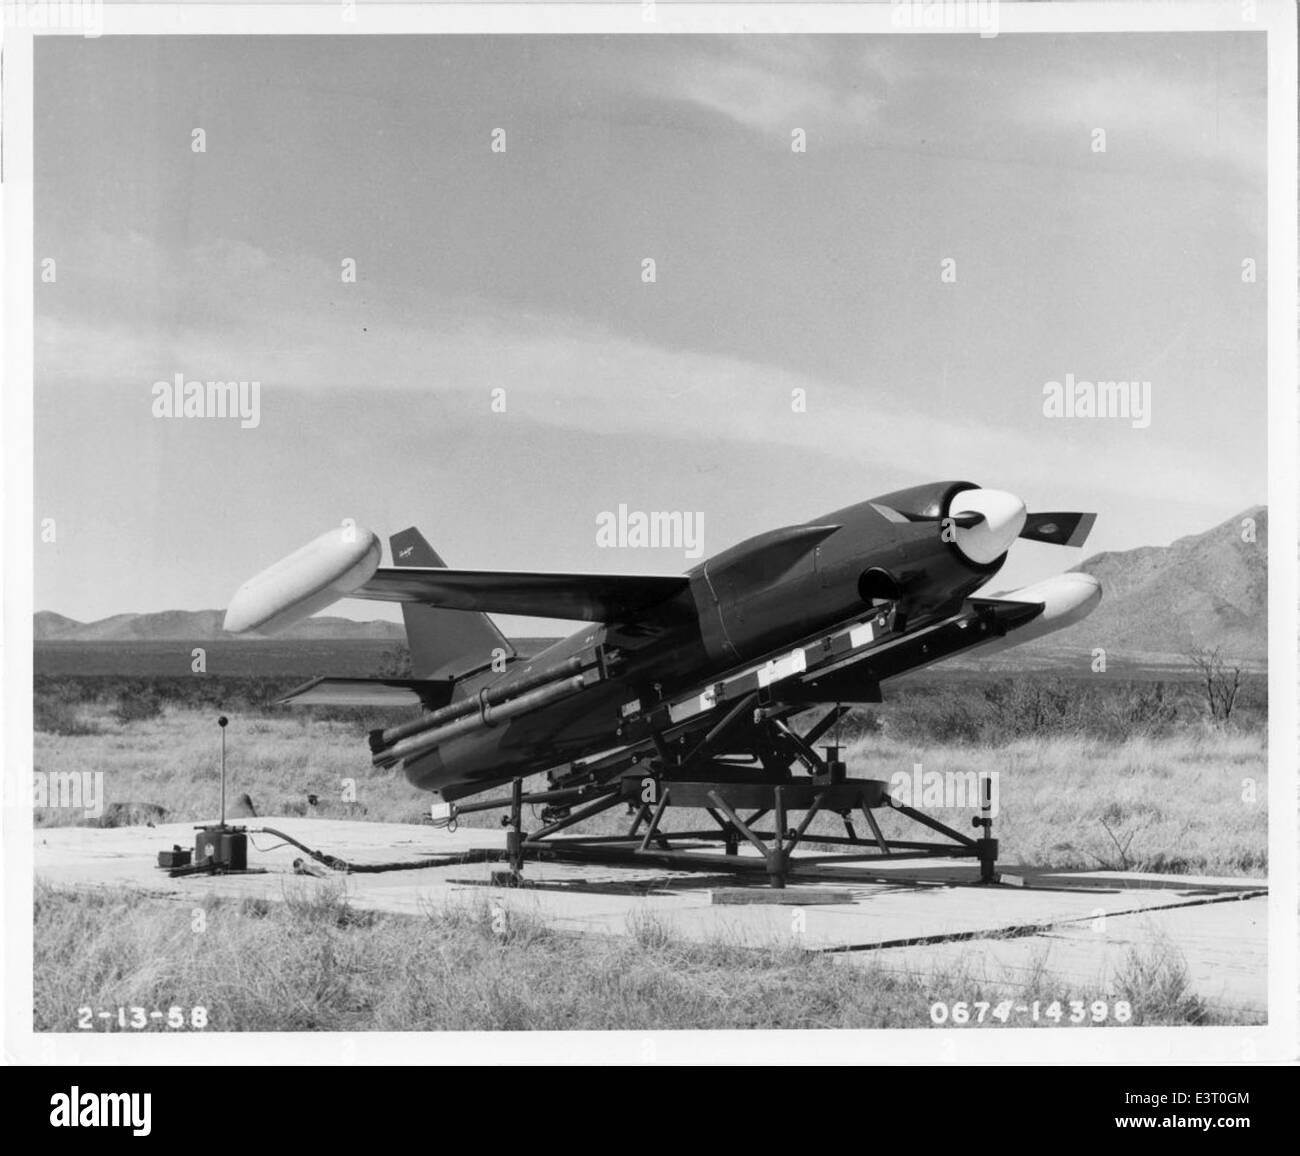 0674-14398 1958-02-13 Radioplane RP-77D Turbo-Prop print scan Stock Photo